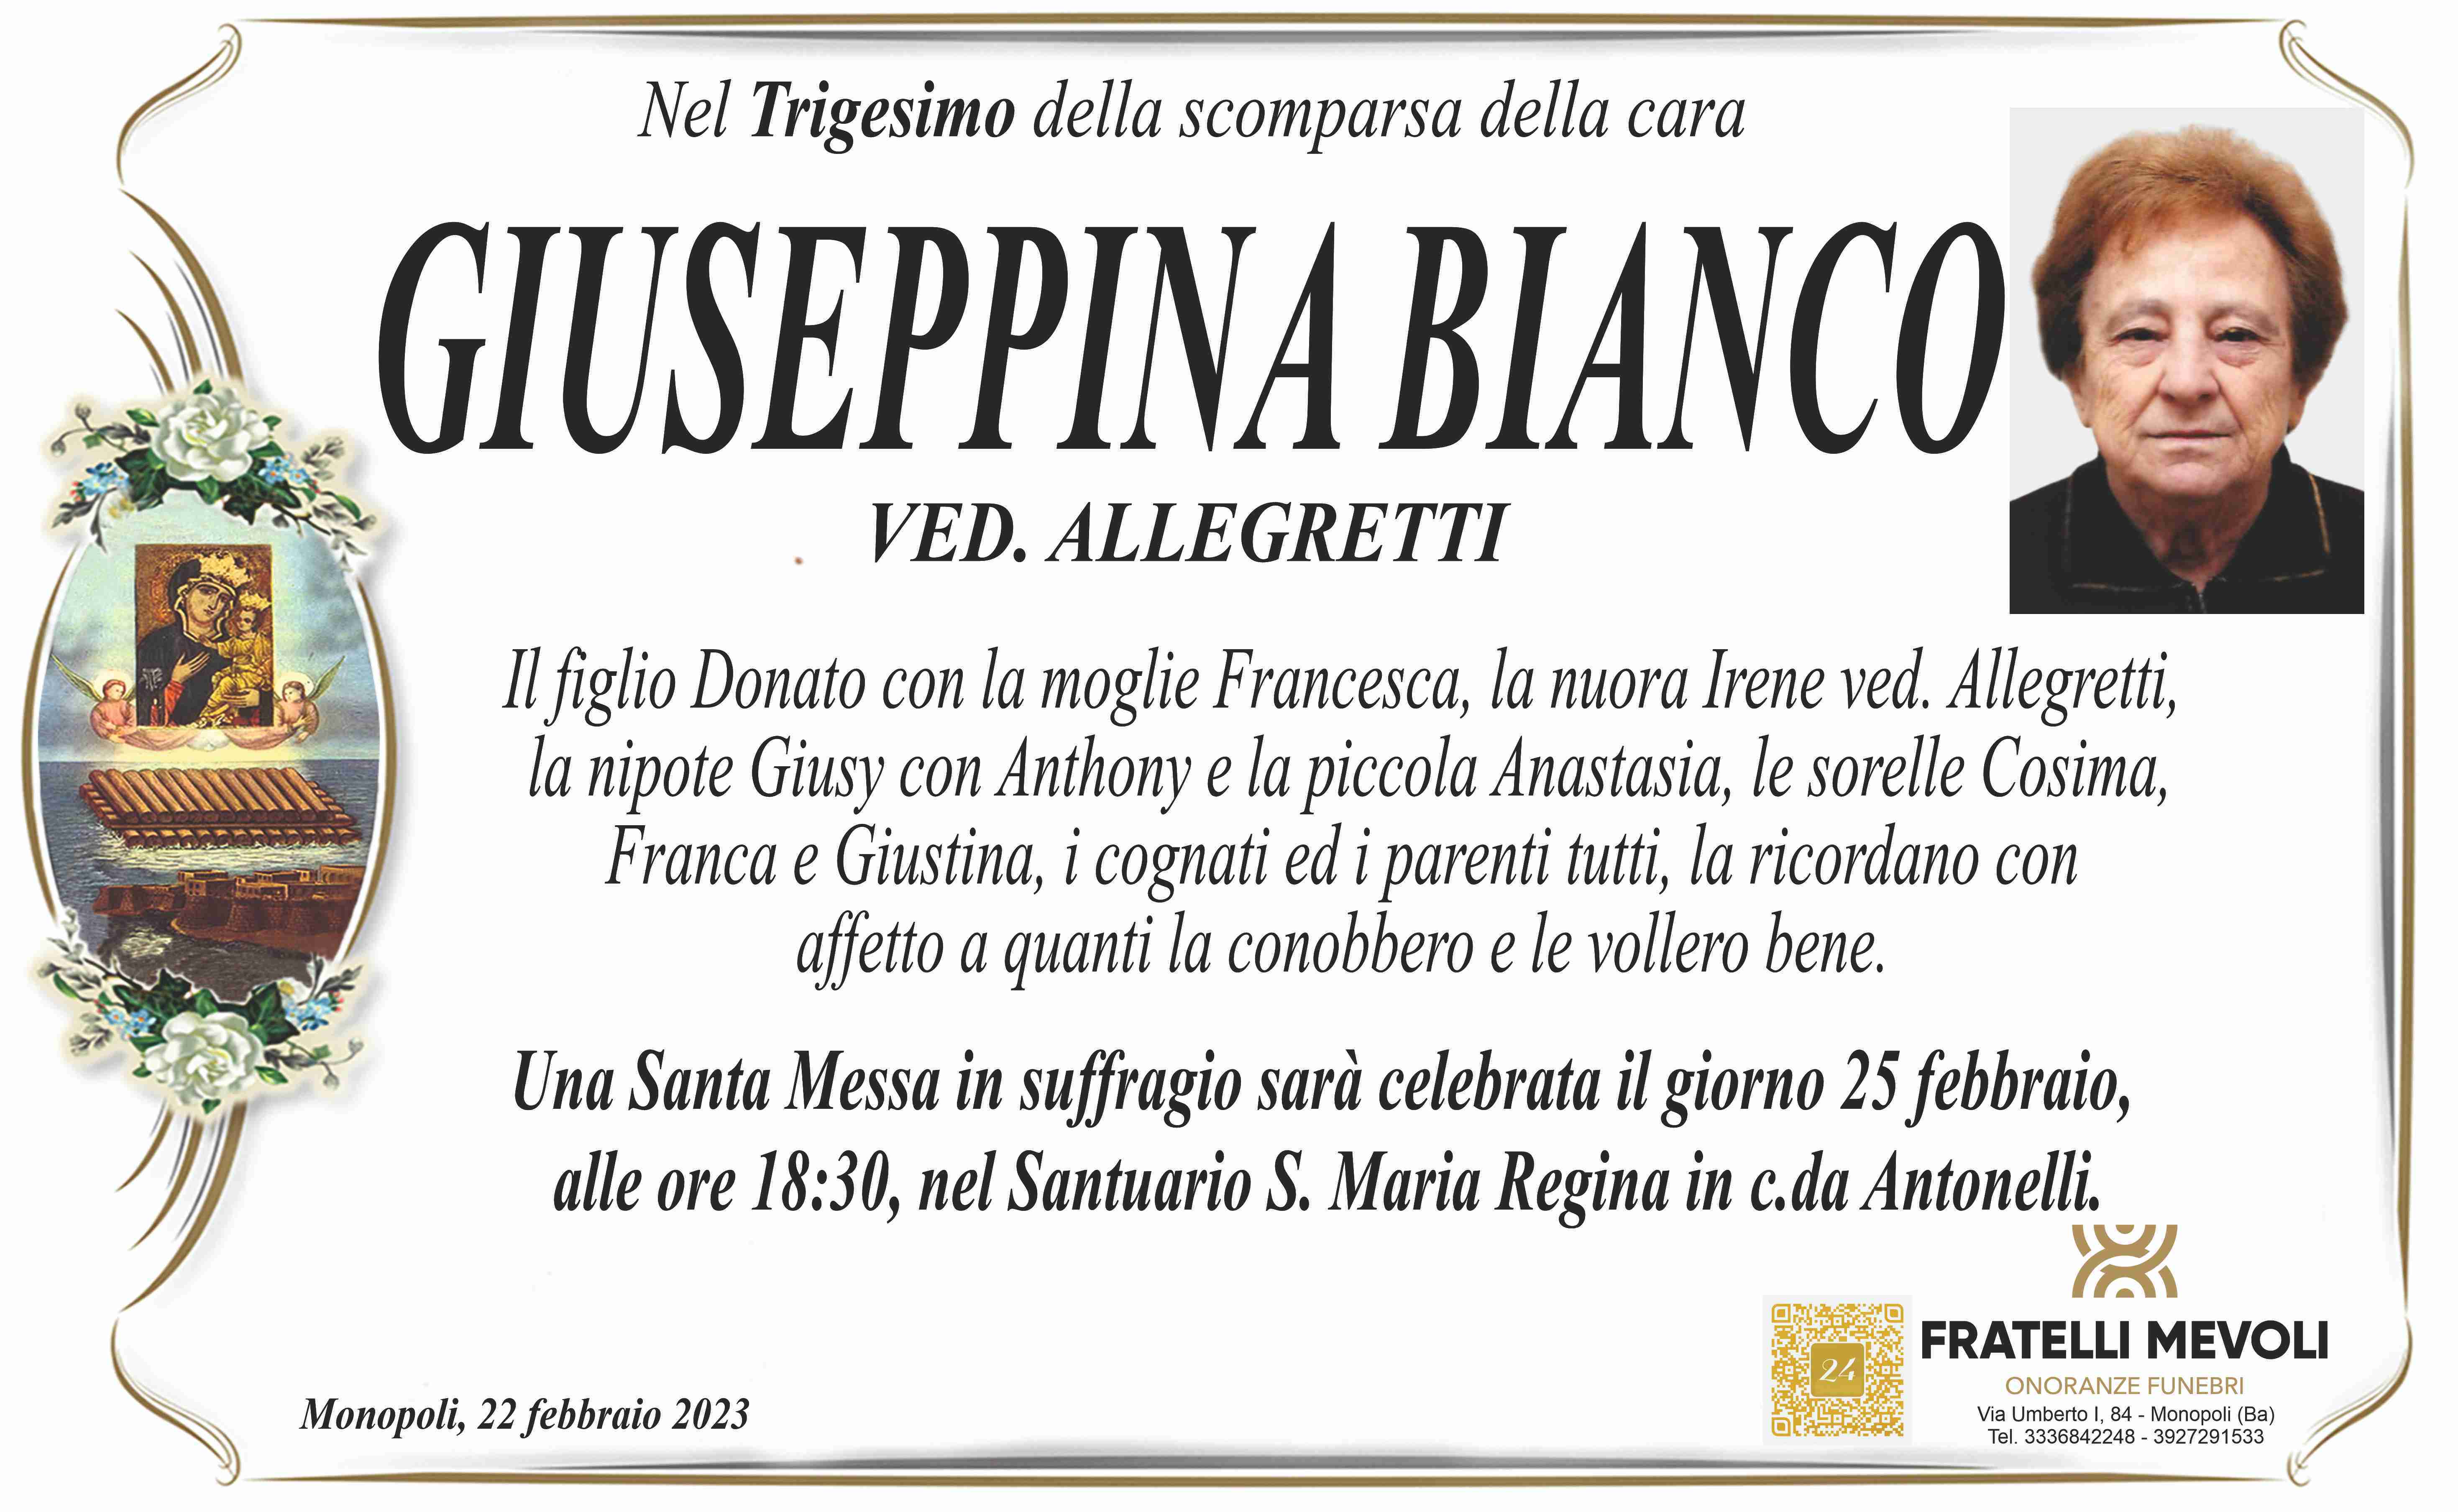 Giuseppina Bianco